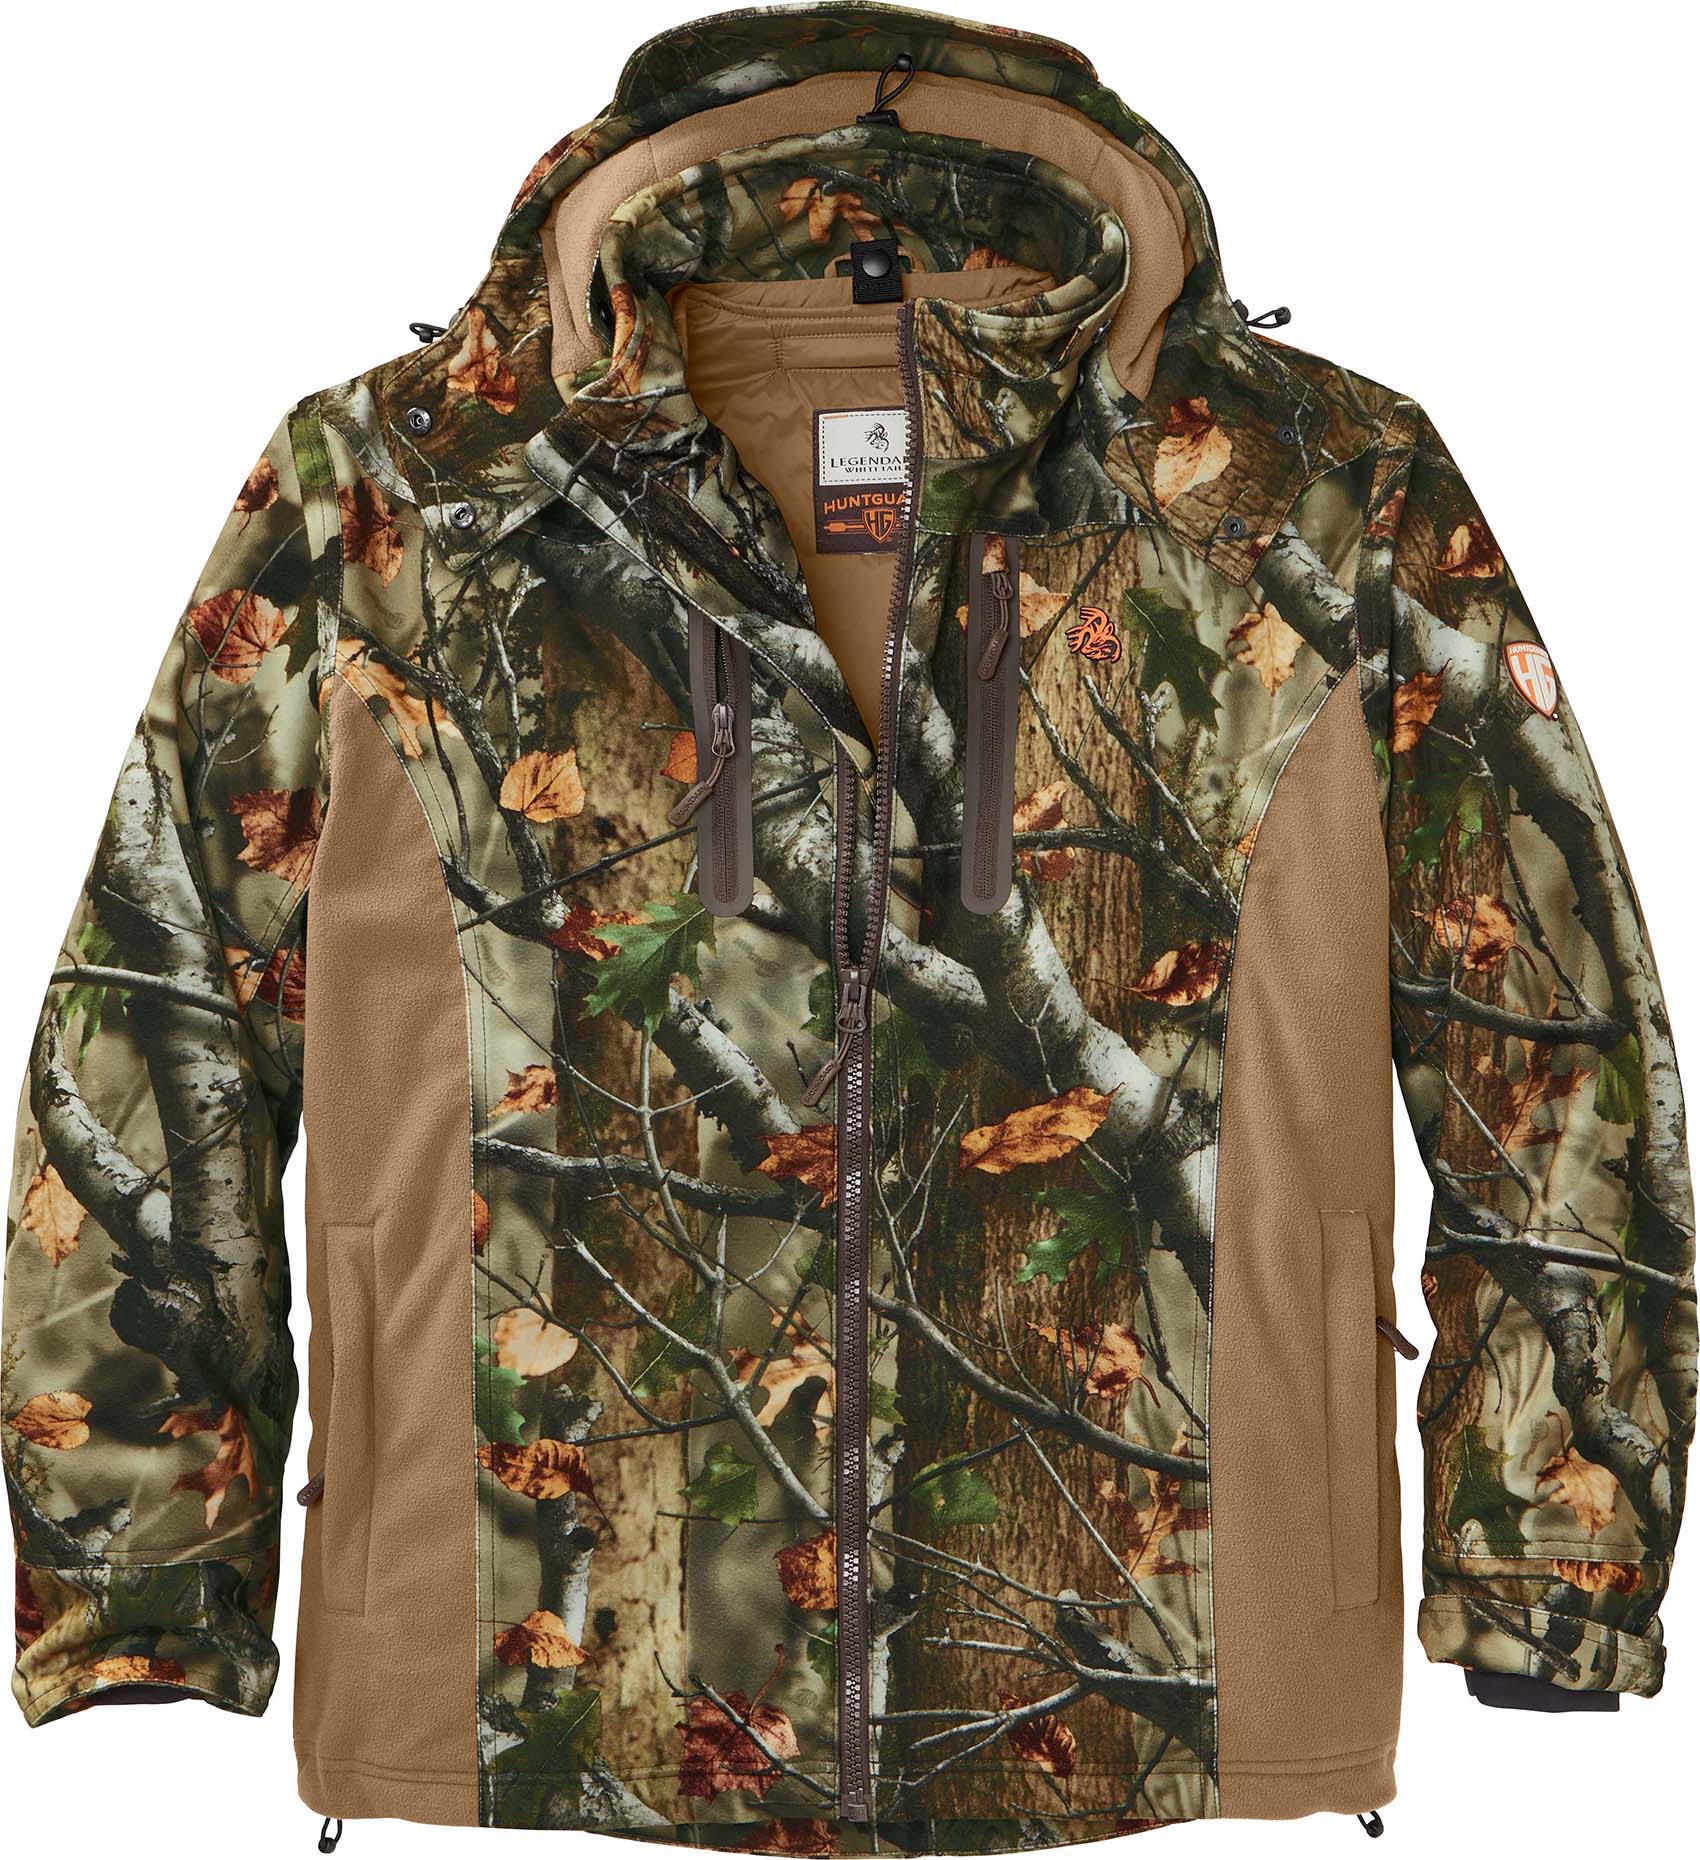 Women's Hunting Jacket Cheap Buy, Save 55% | jlcatj.gob.mx